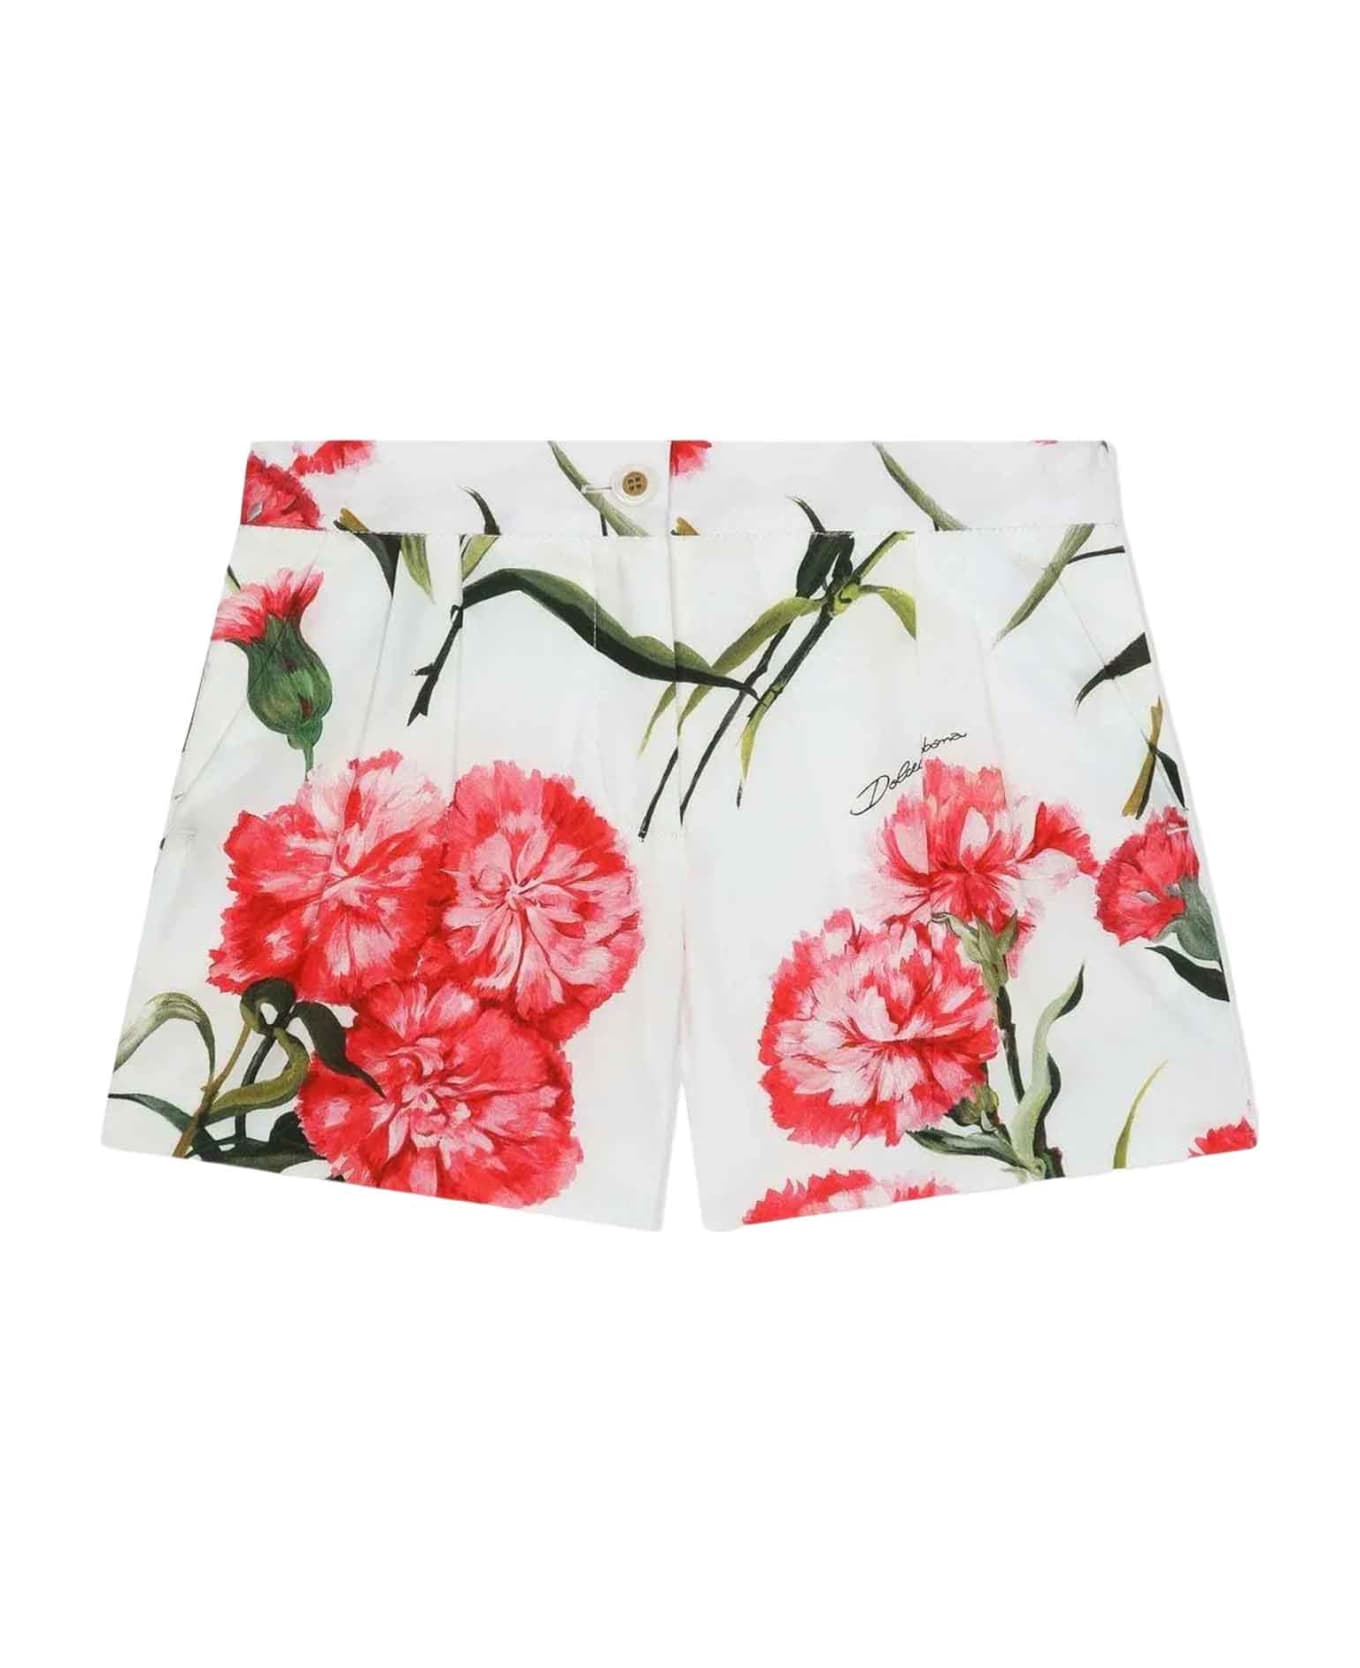 Dolce ADJUSTABLE & Gabbana White Shorts Girl - WHITE/RED